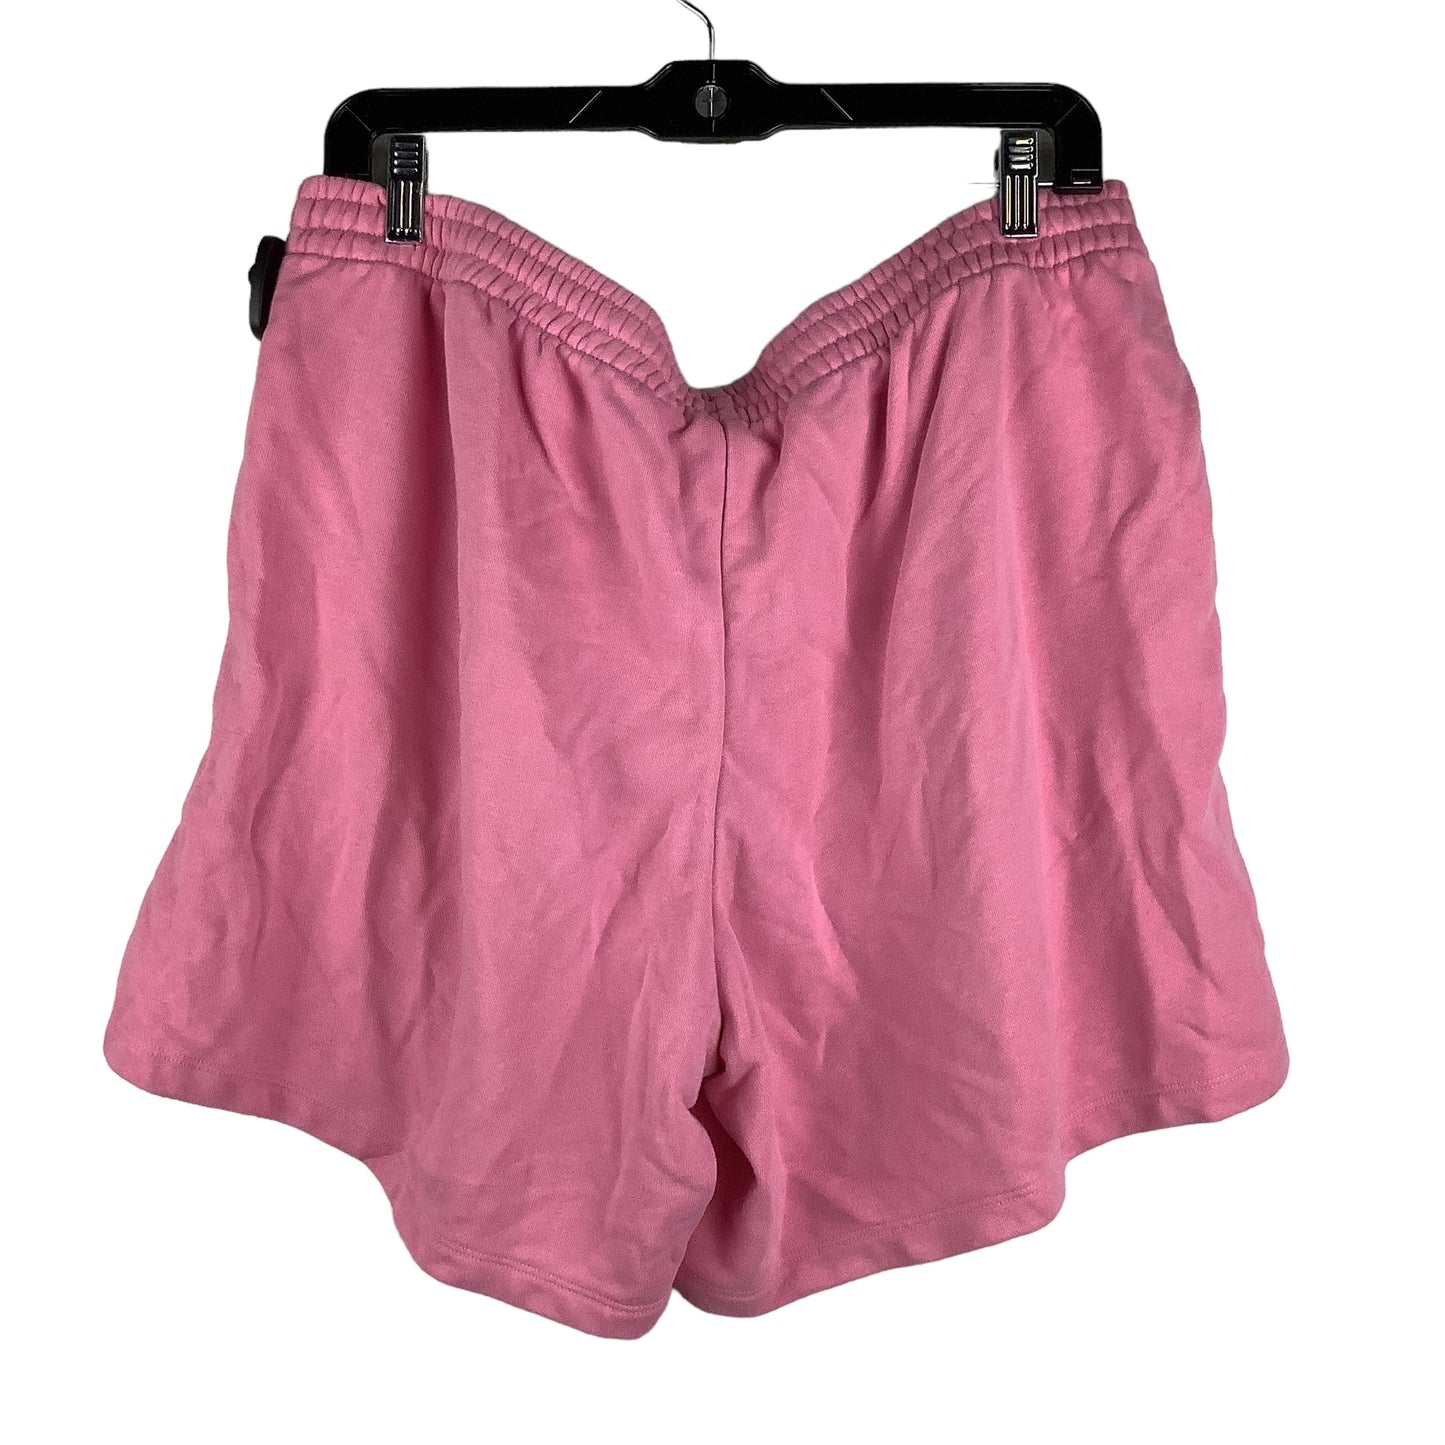 Pink Athletic Shorts Adidas, Size 1x